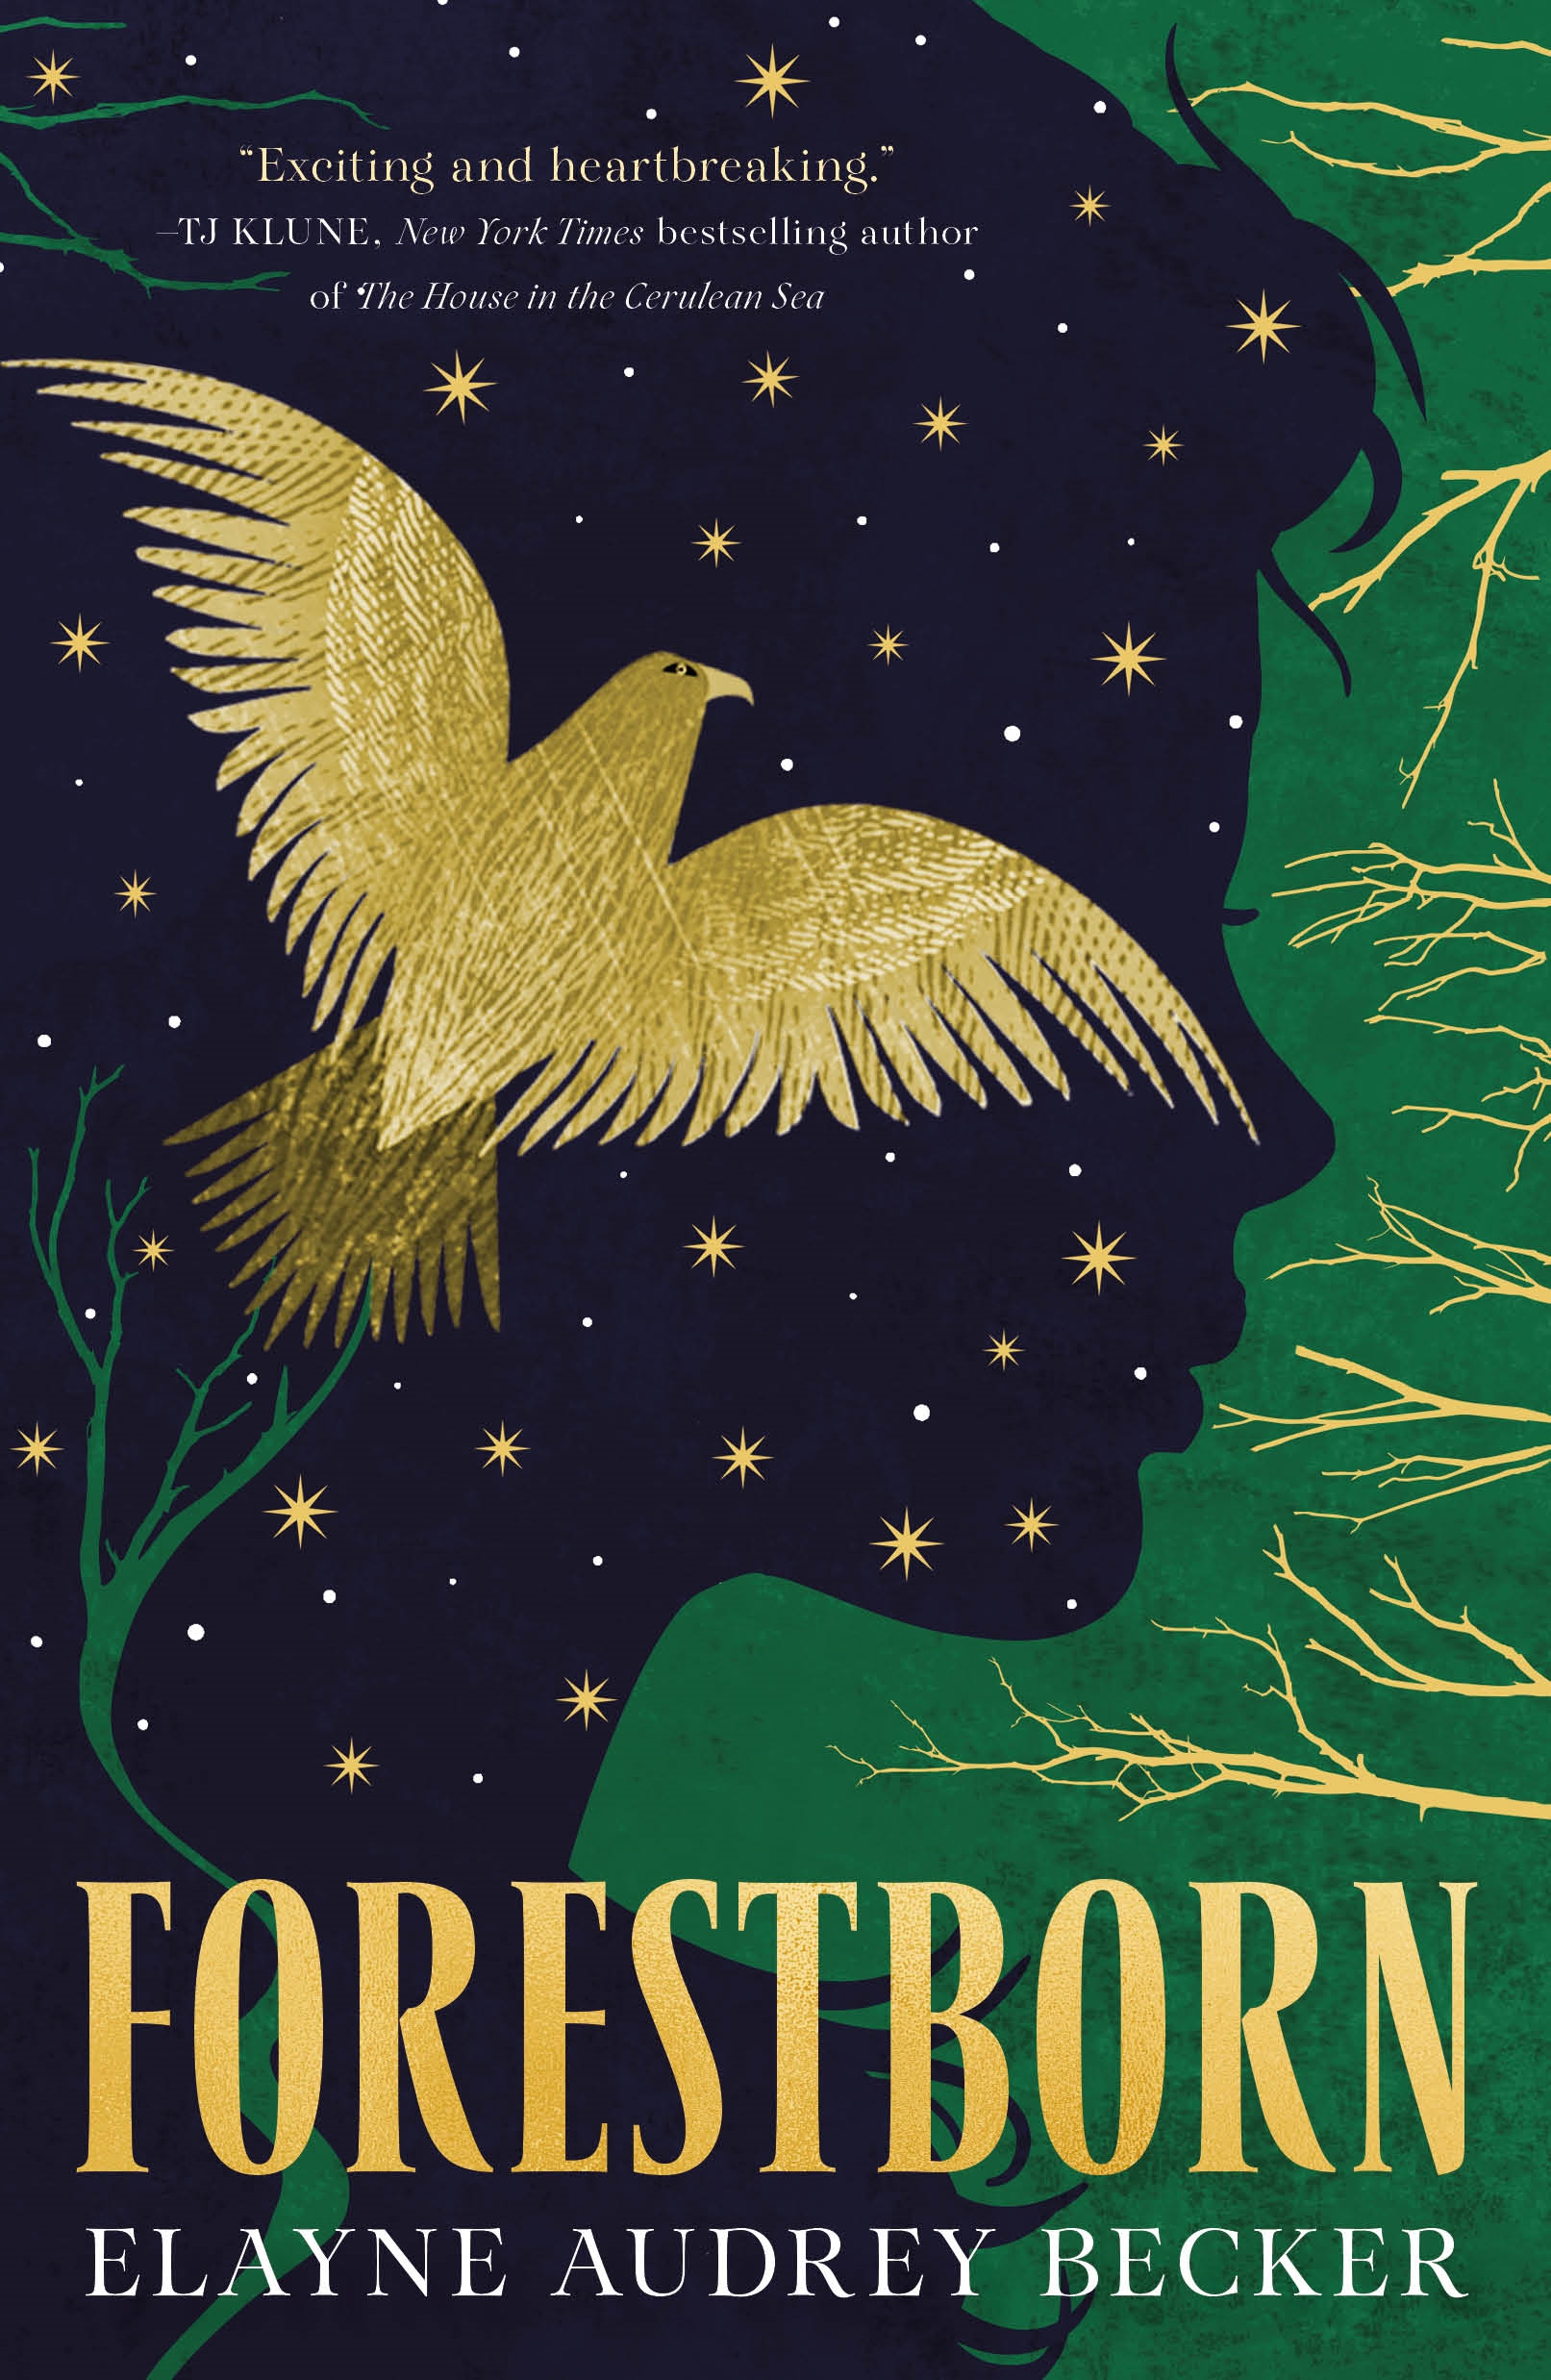 Forestborn by Elayne Audrey Becker